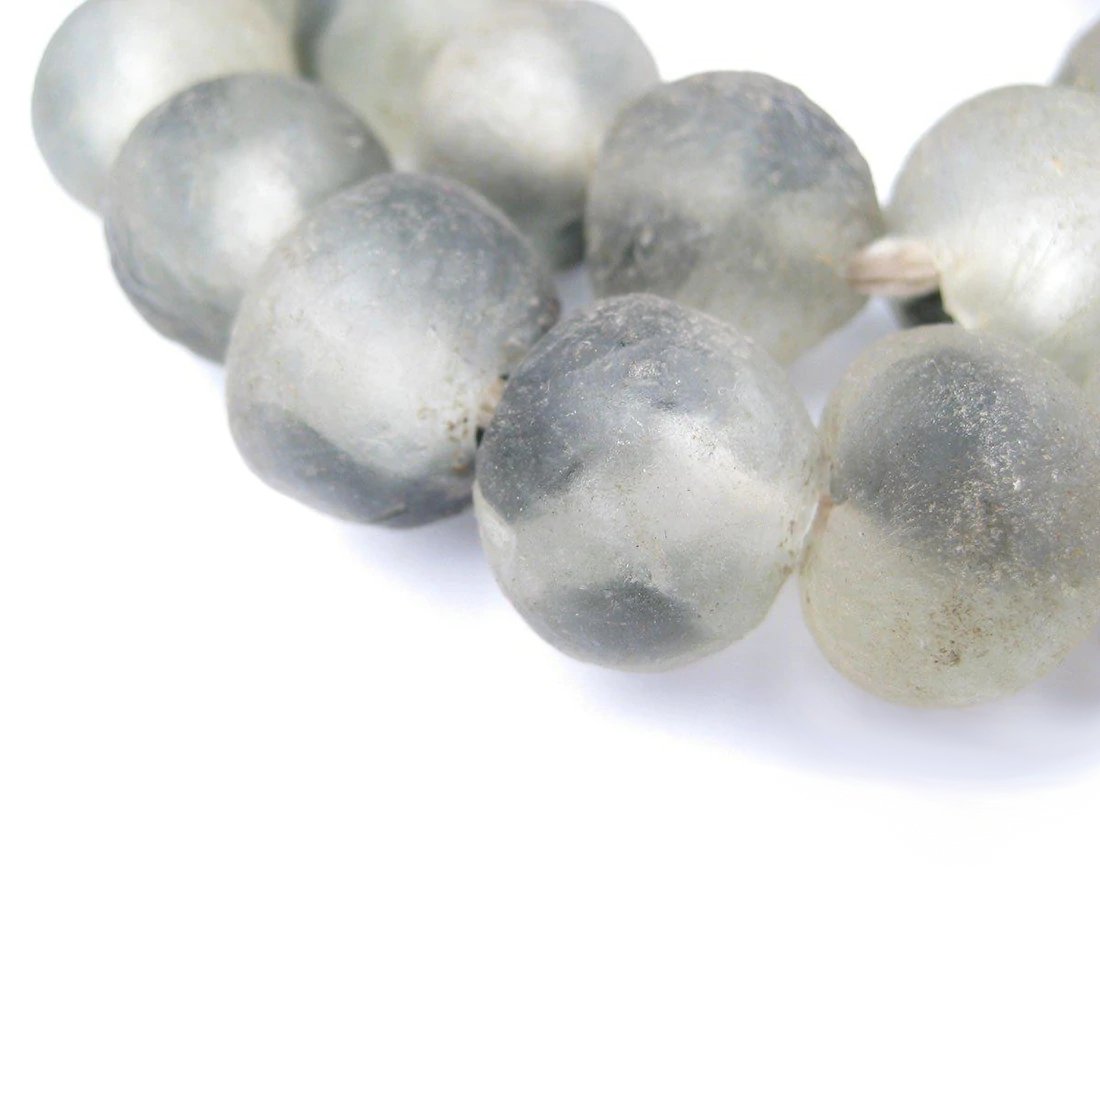 Jumbo Grey Mist Recycled Glass Beads Garland - sonder and wolf